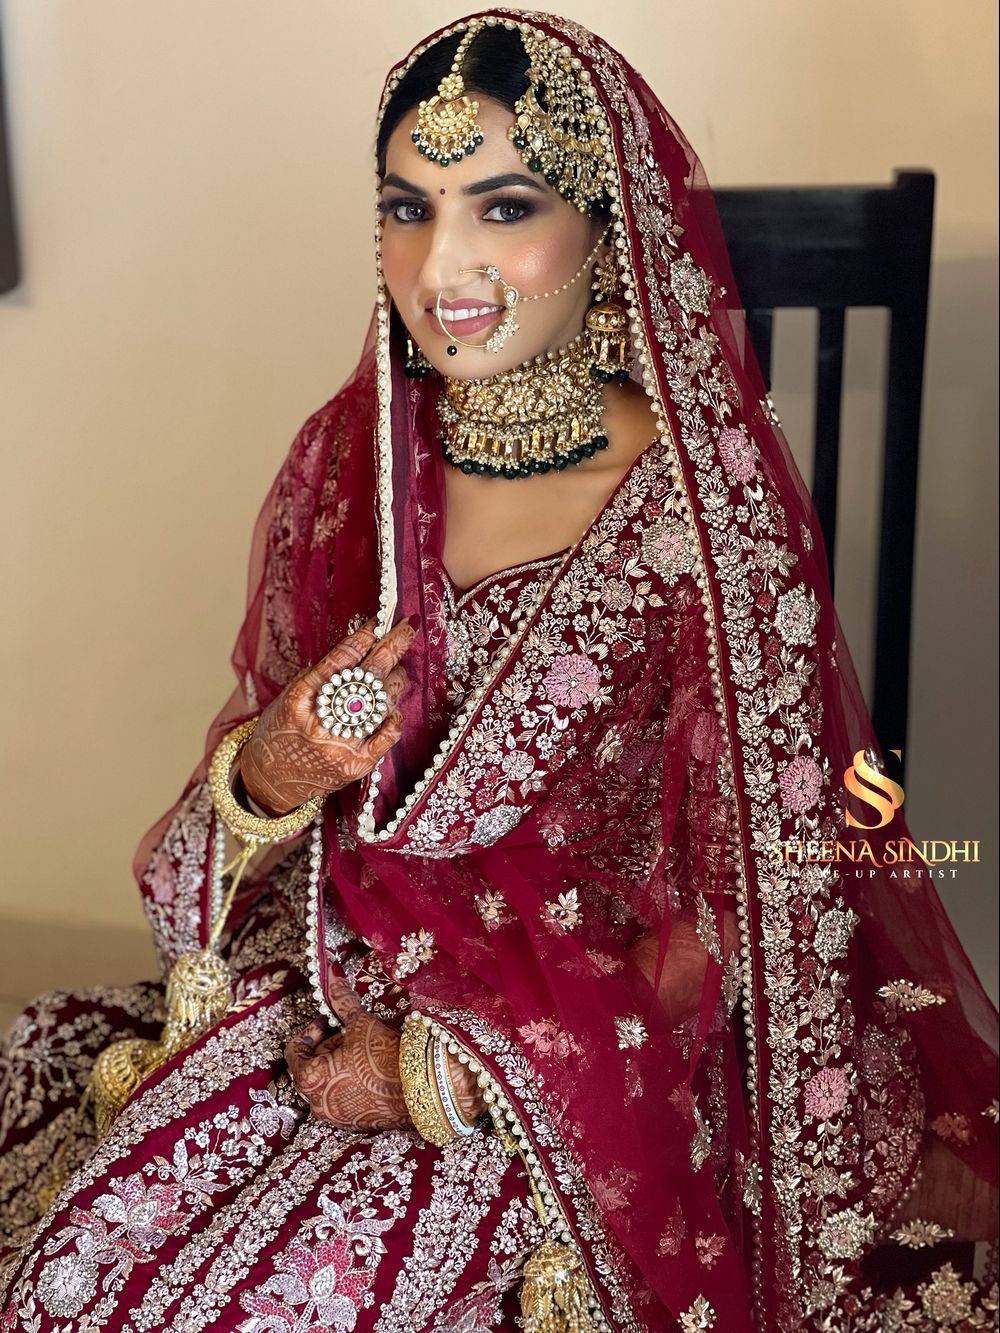 Photo From Bridal - By Sheena Sindhi Makeup Artist